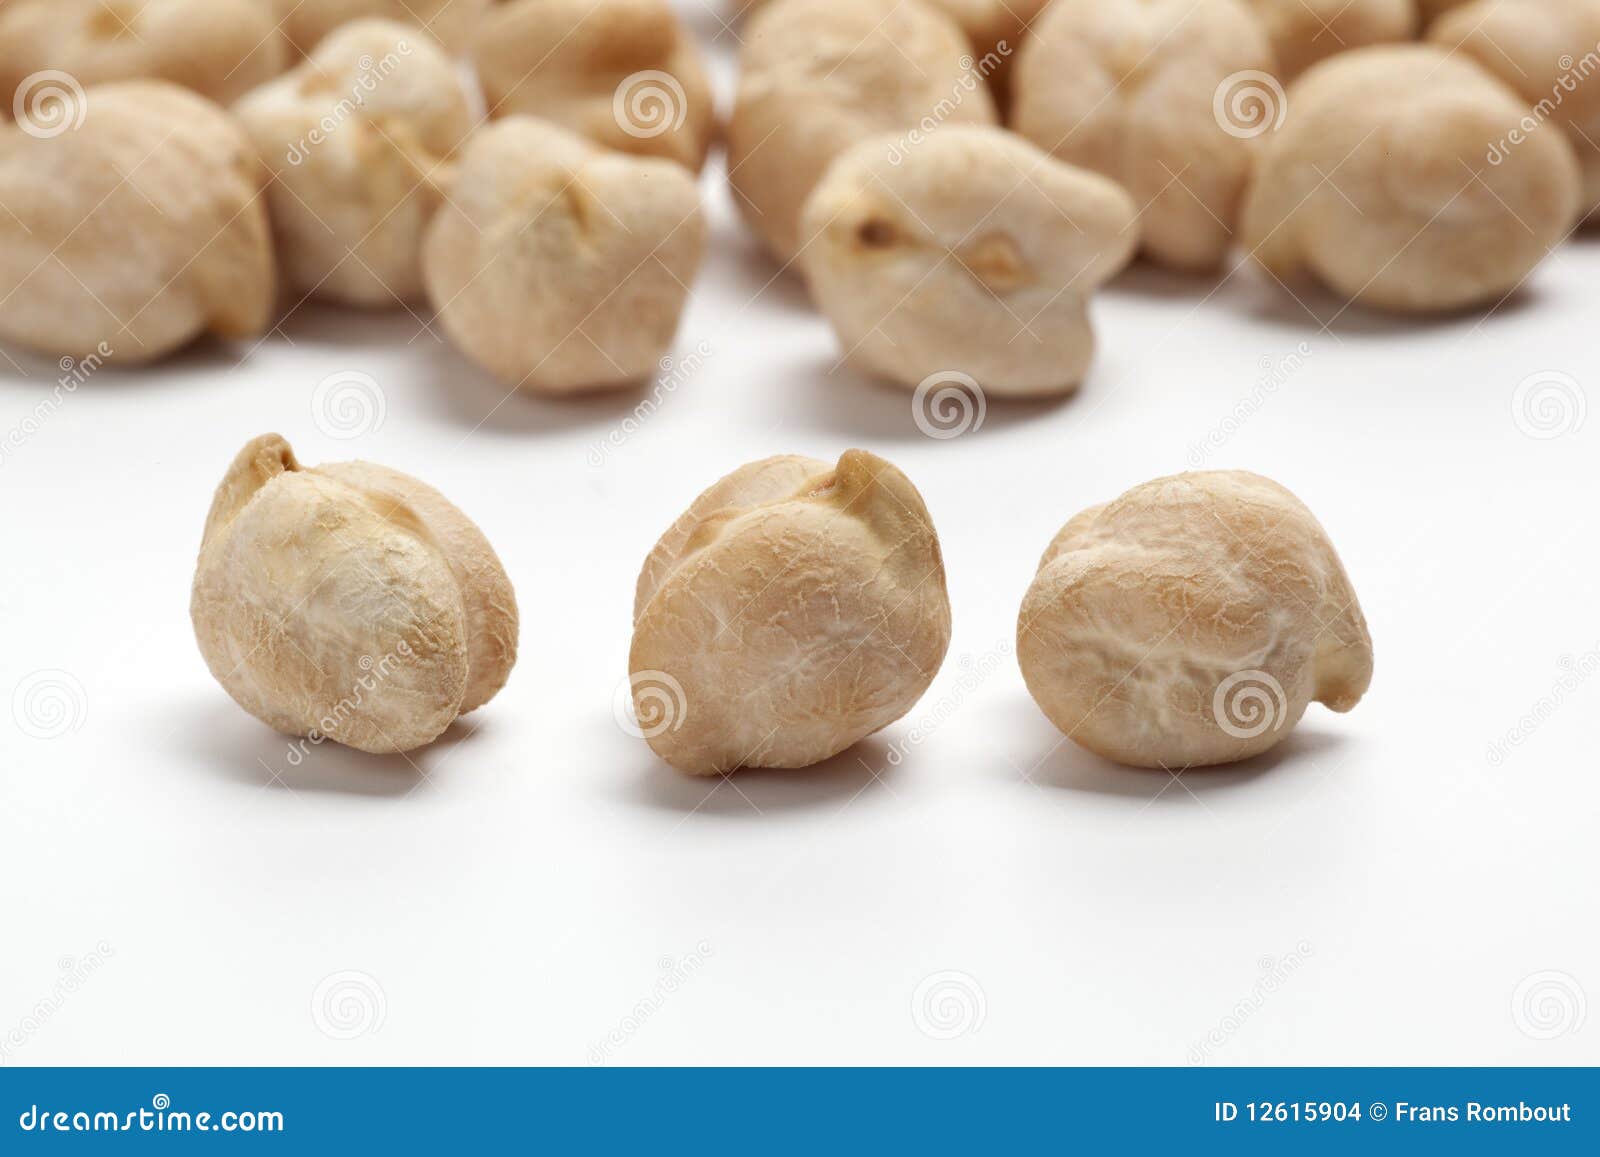 garbanzo beans, chickpeas on white background